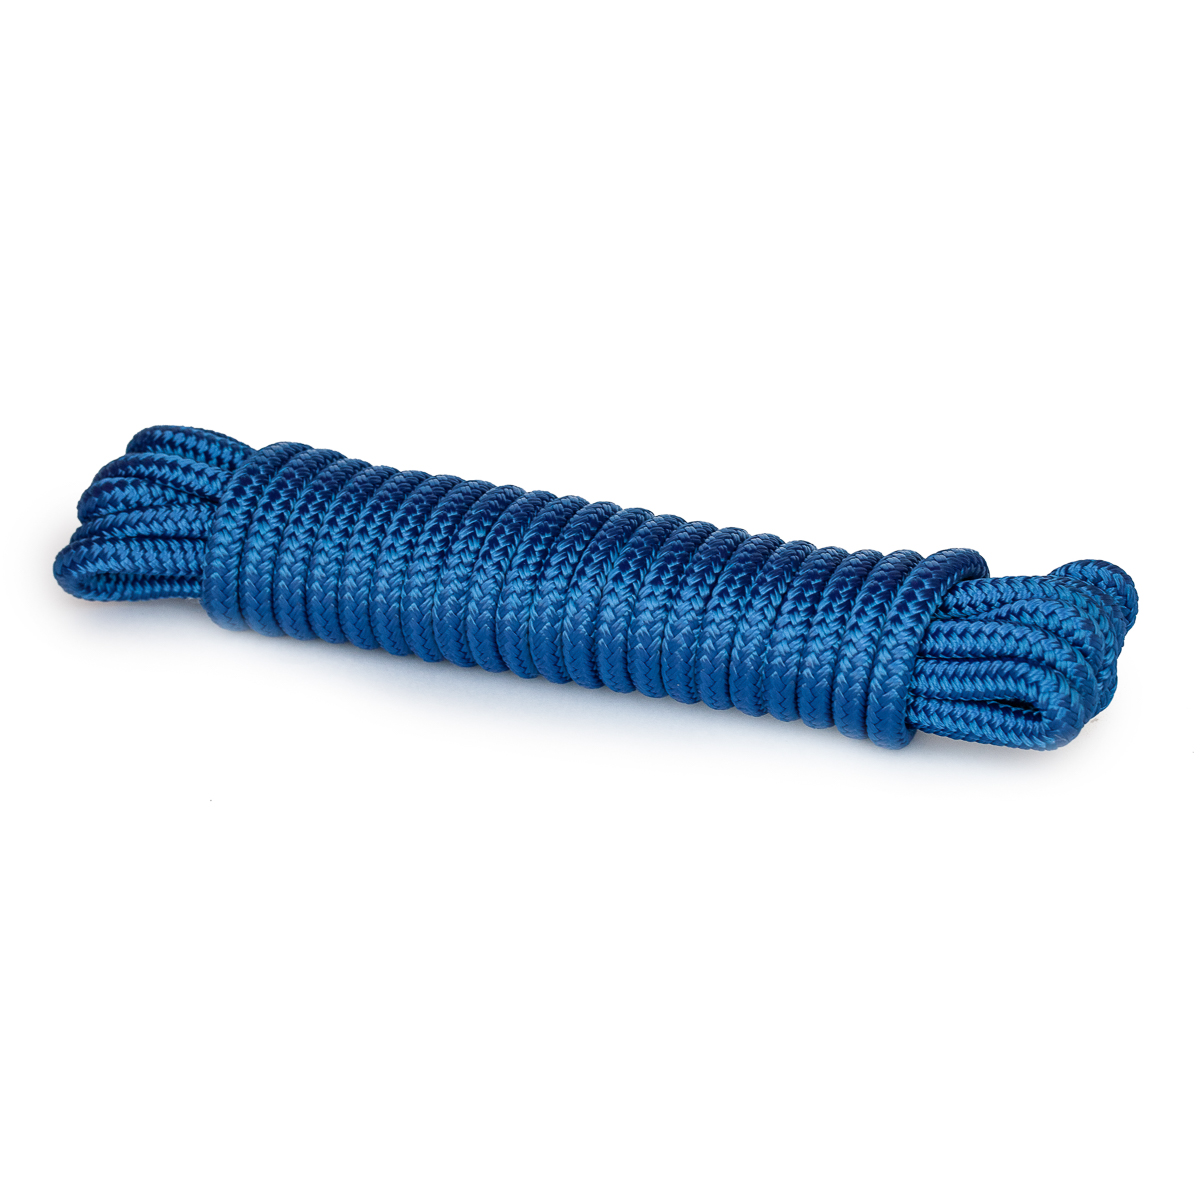 Шнур плетеный швартовый (Петроканат) 14 мм, 9 м, синий